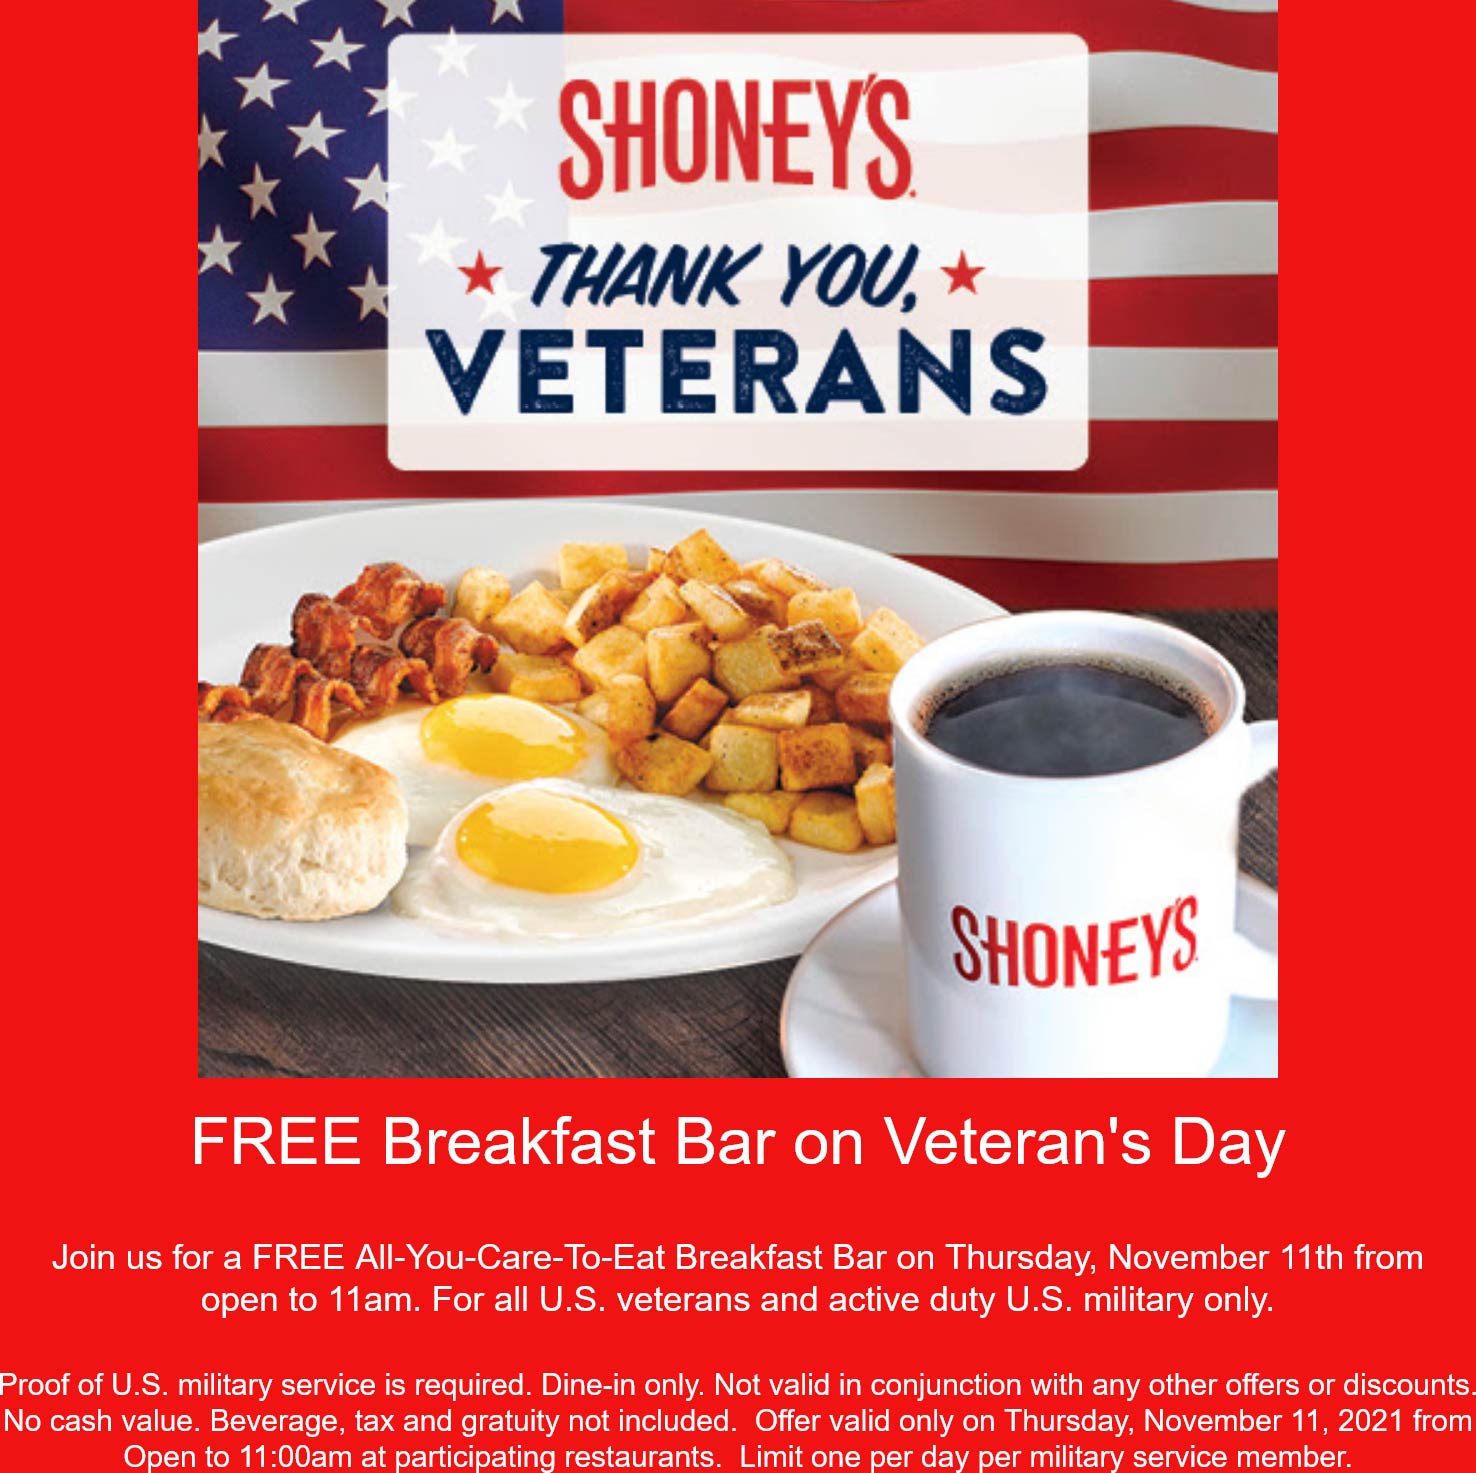 Shoneys restaurants Coupon  Veterans & military enjoy a free breakfast bar today at Shoneys #shoneys 